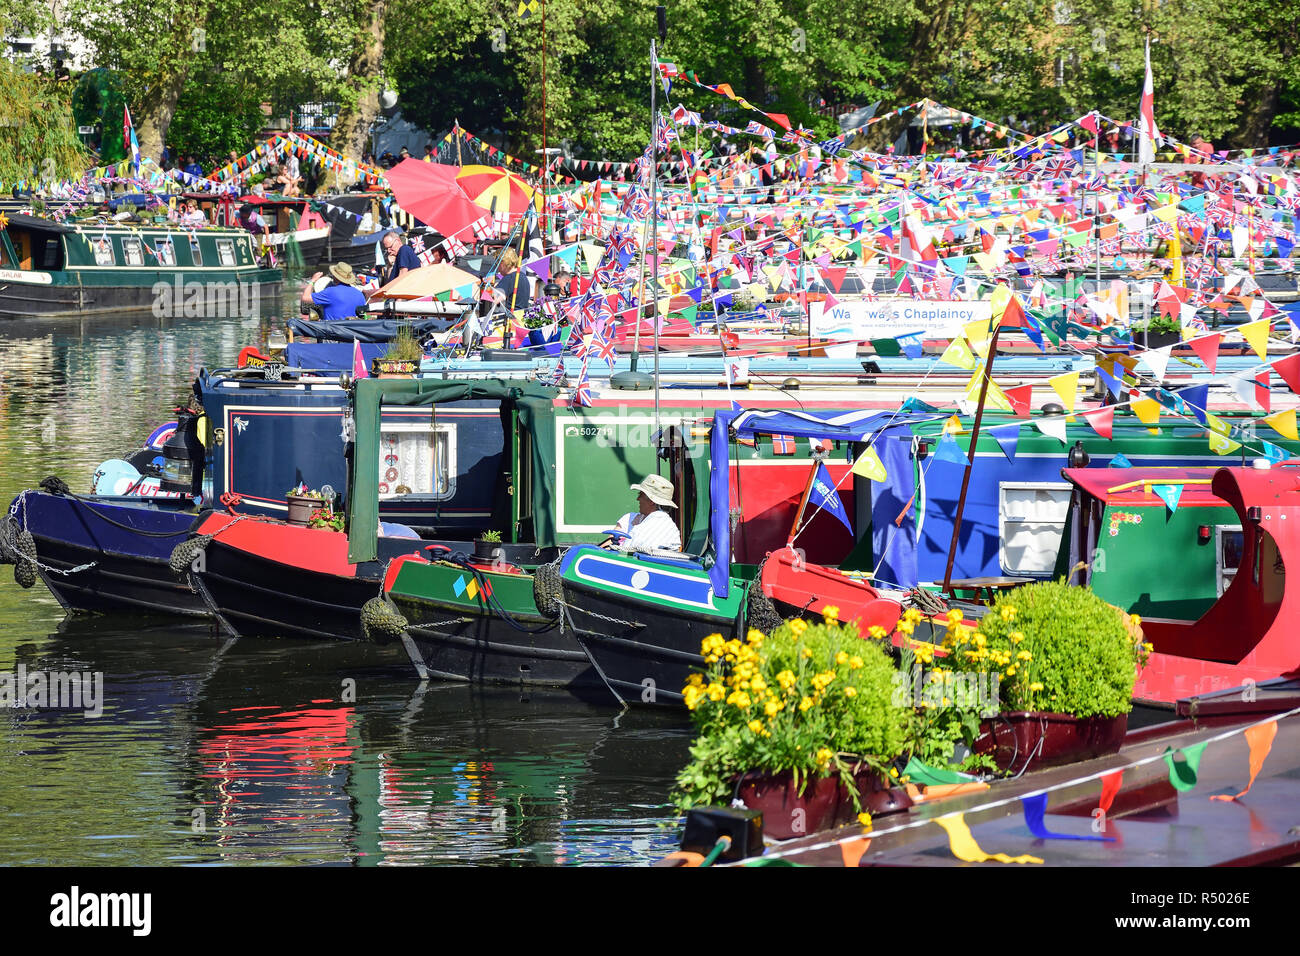 Canalway Calvalcade Festival am Grand Union Canal, Little Venice, Maida Vale, Westminster, London, England, Vereinigtes Königreich Stockfoto